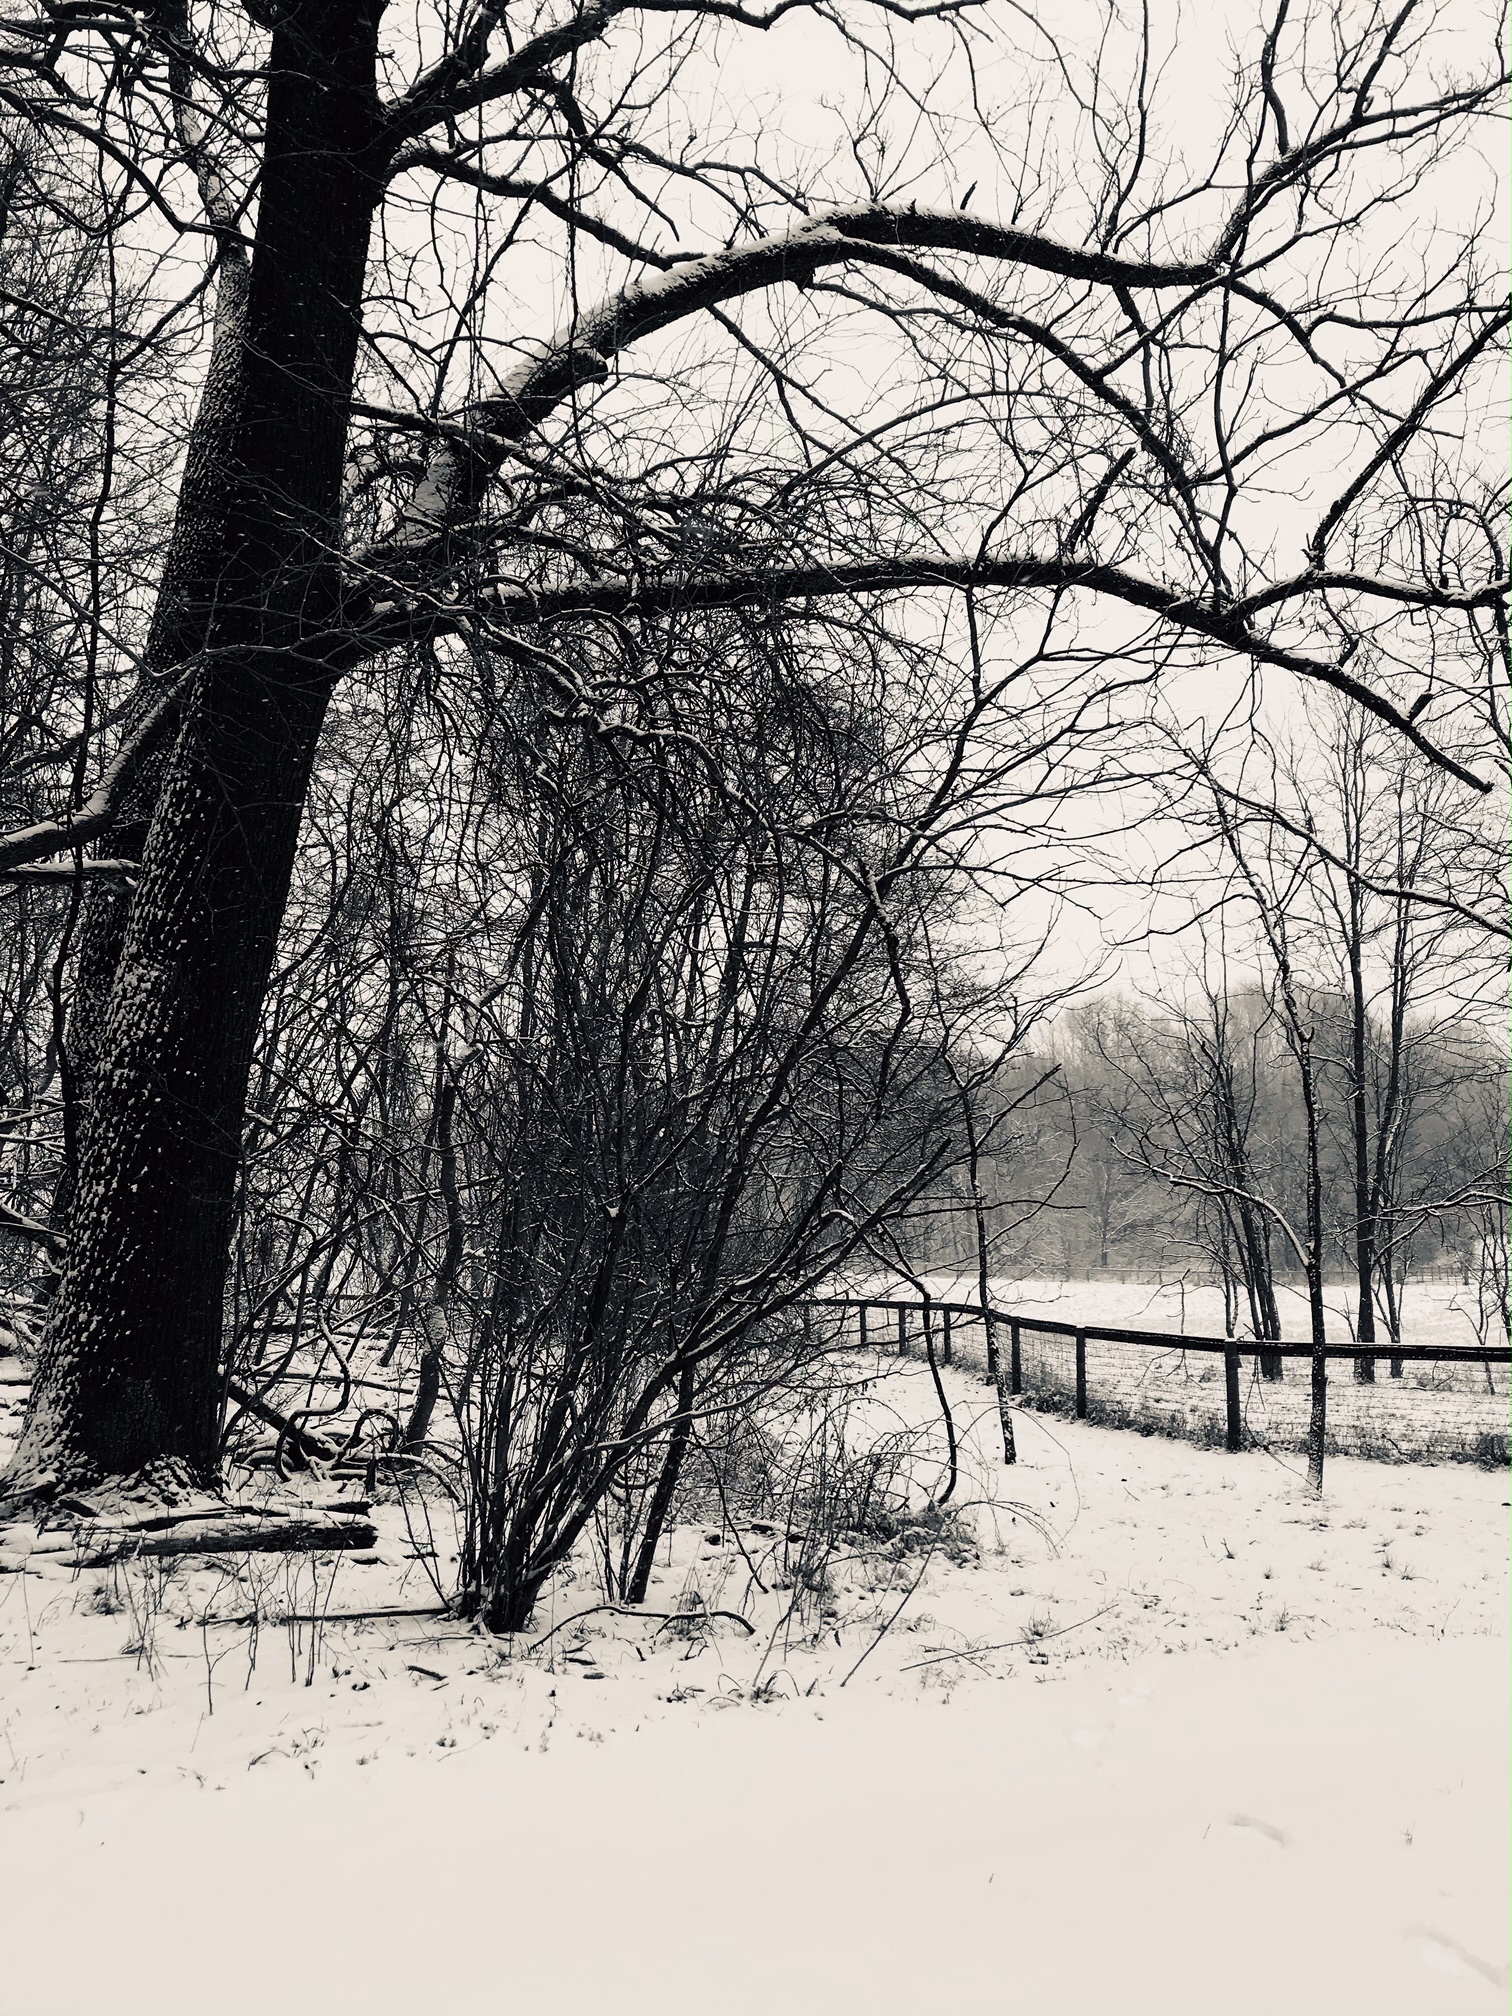 Snow Photos: Feb 2021 - Renaissance Yoga